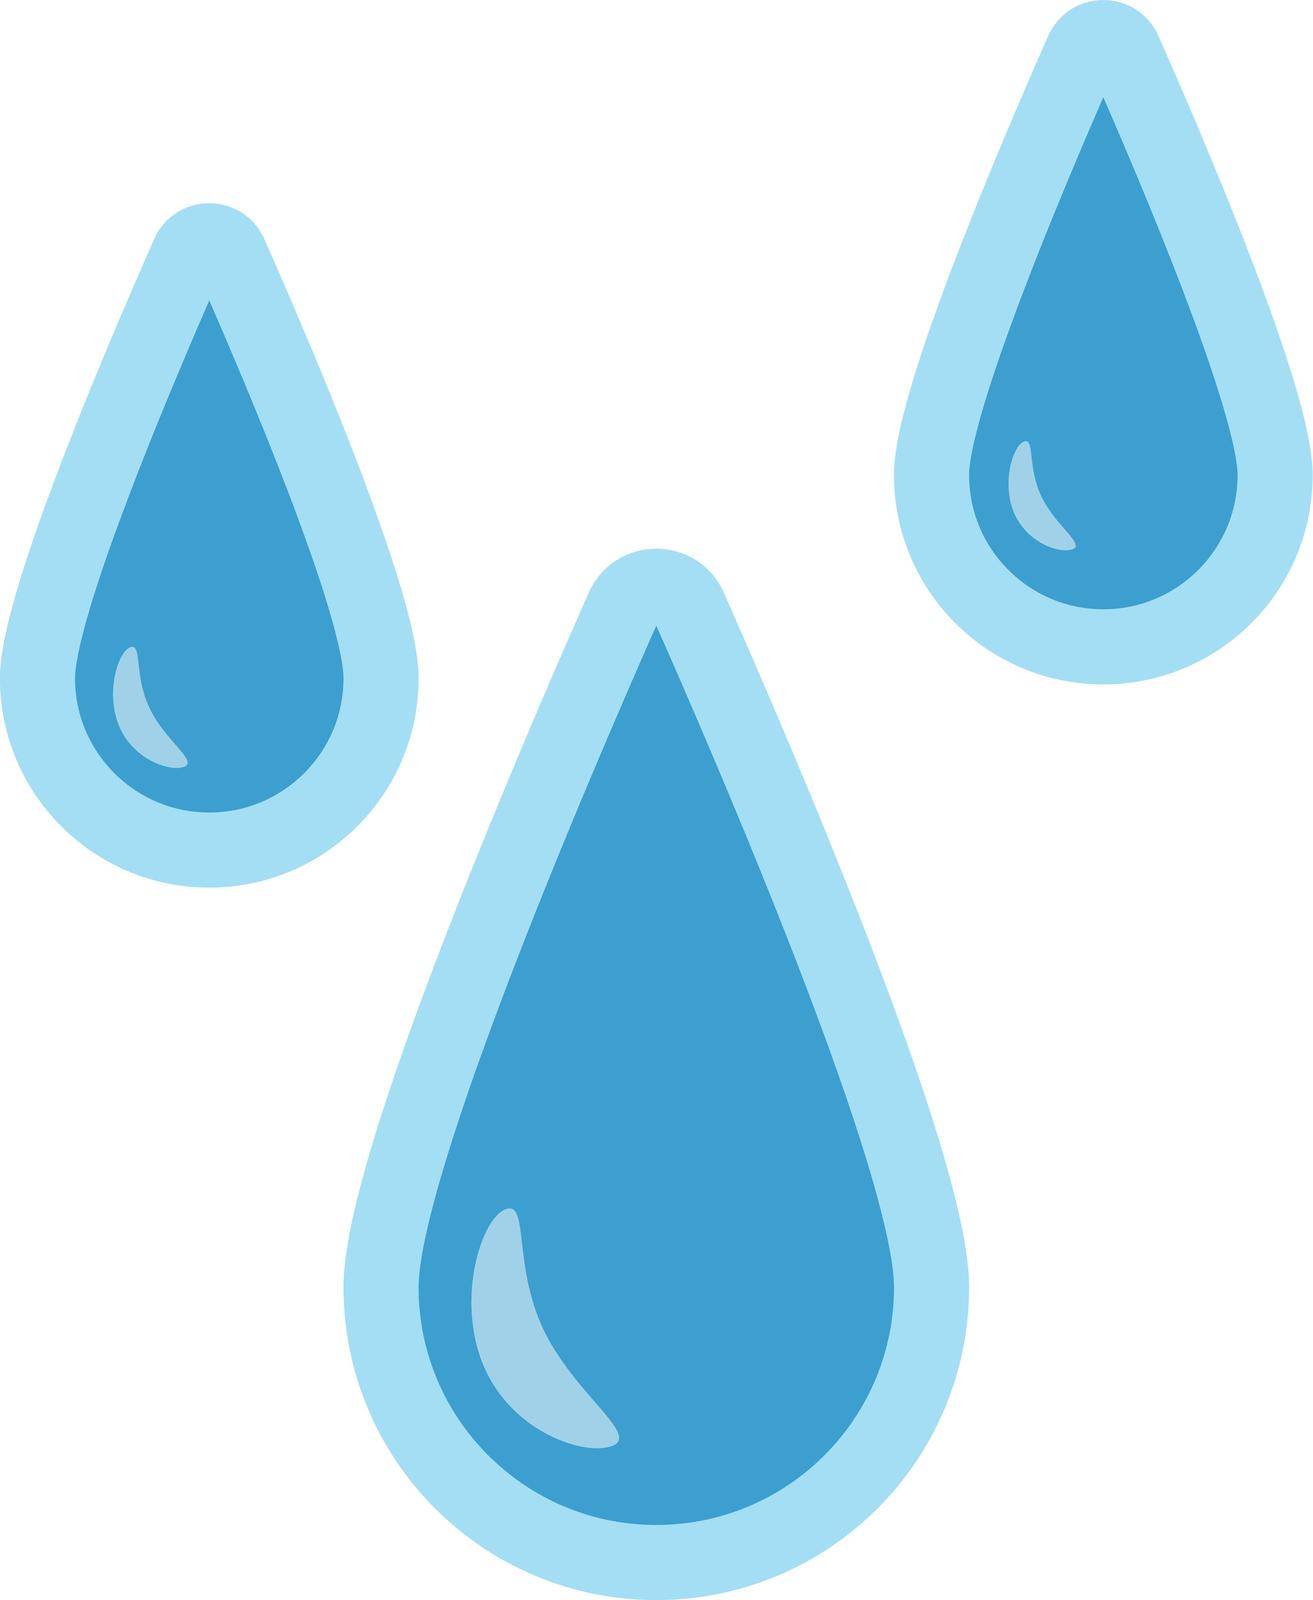 Three drops of water drops icon. Editable vector.